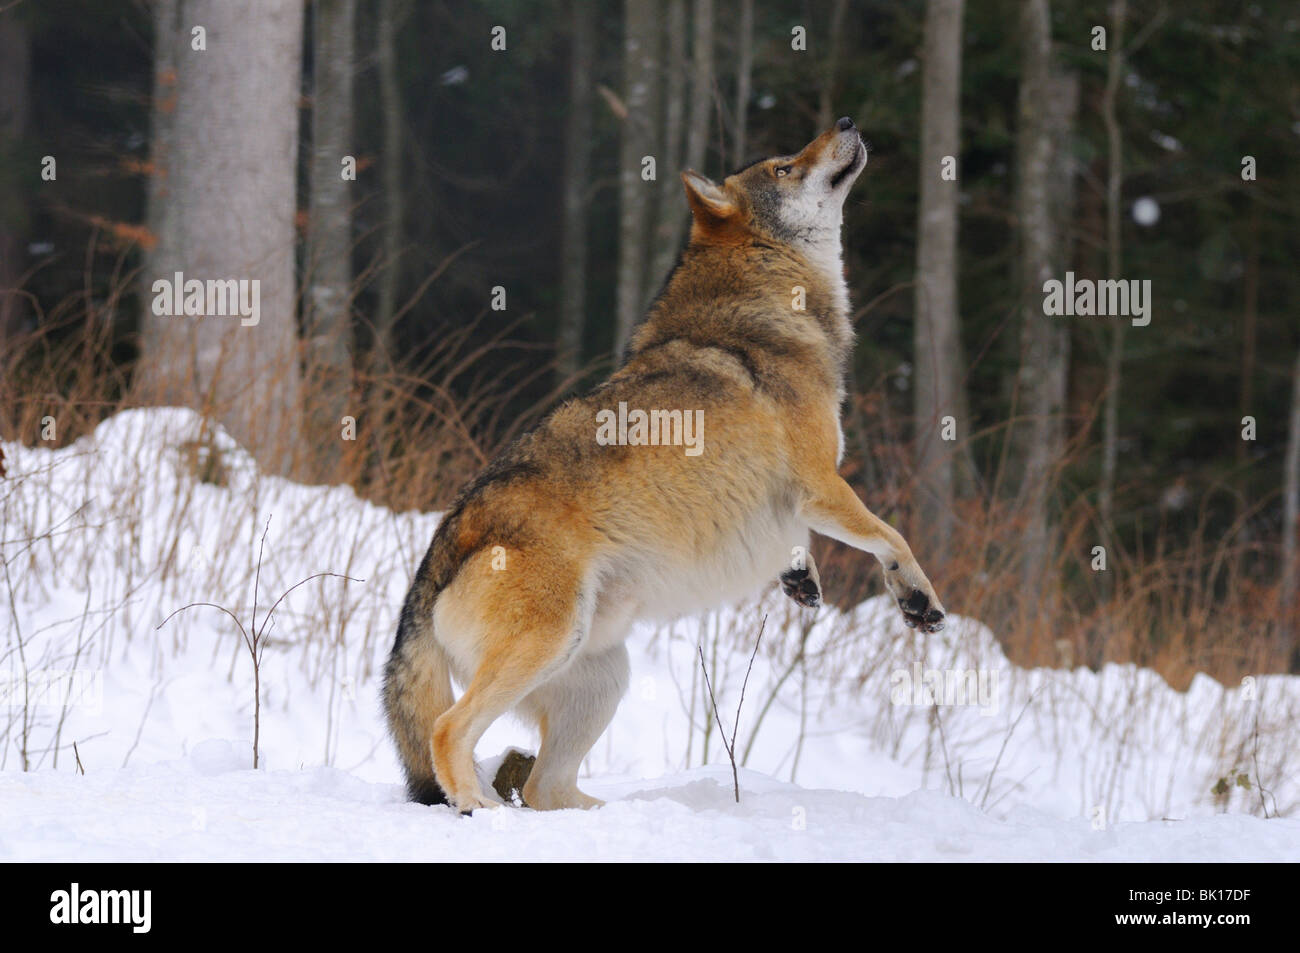 jumping greywolf Stock Photo